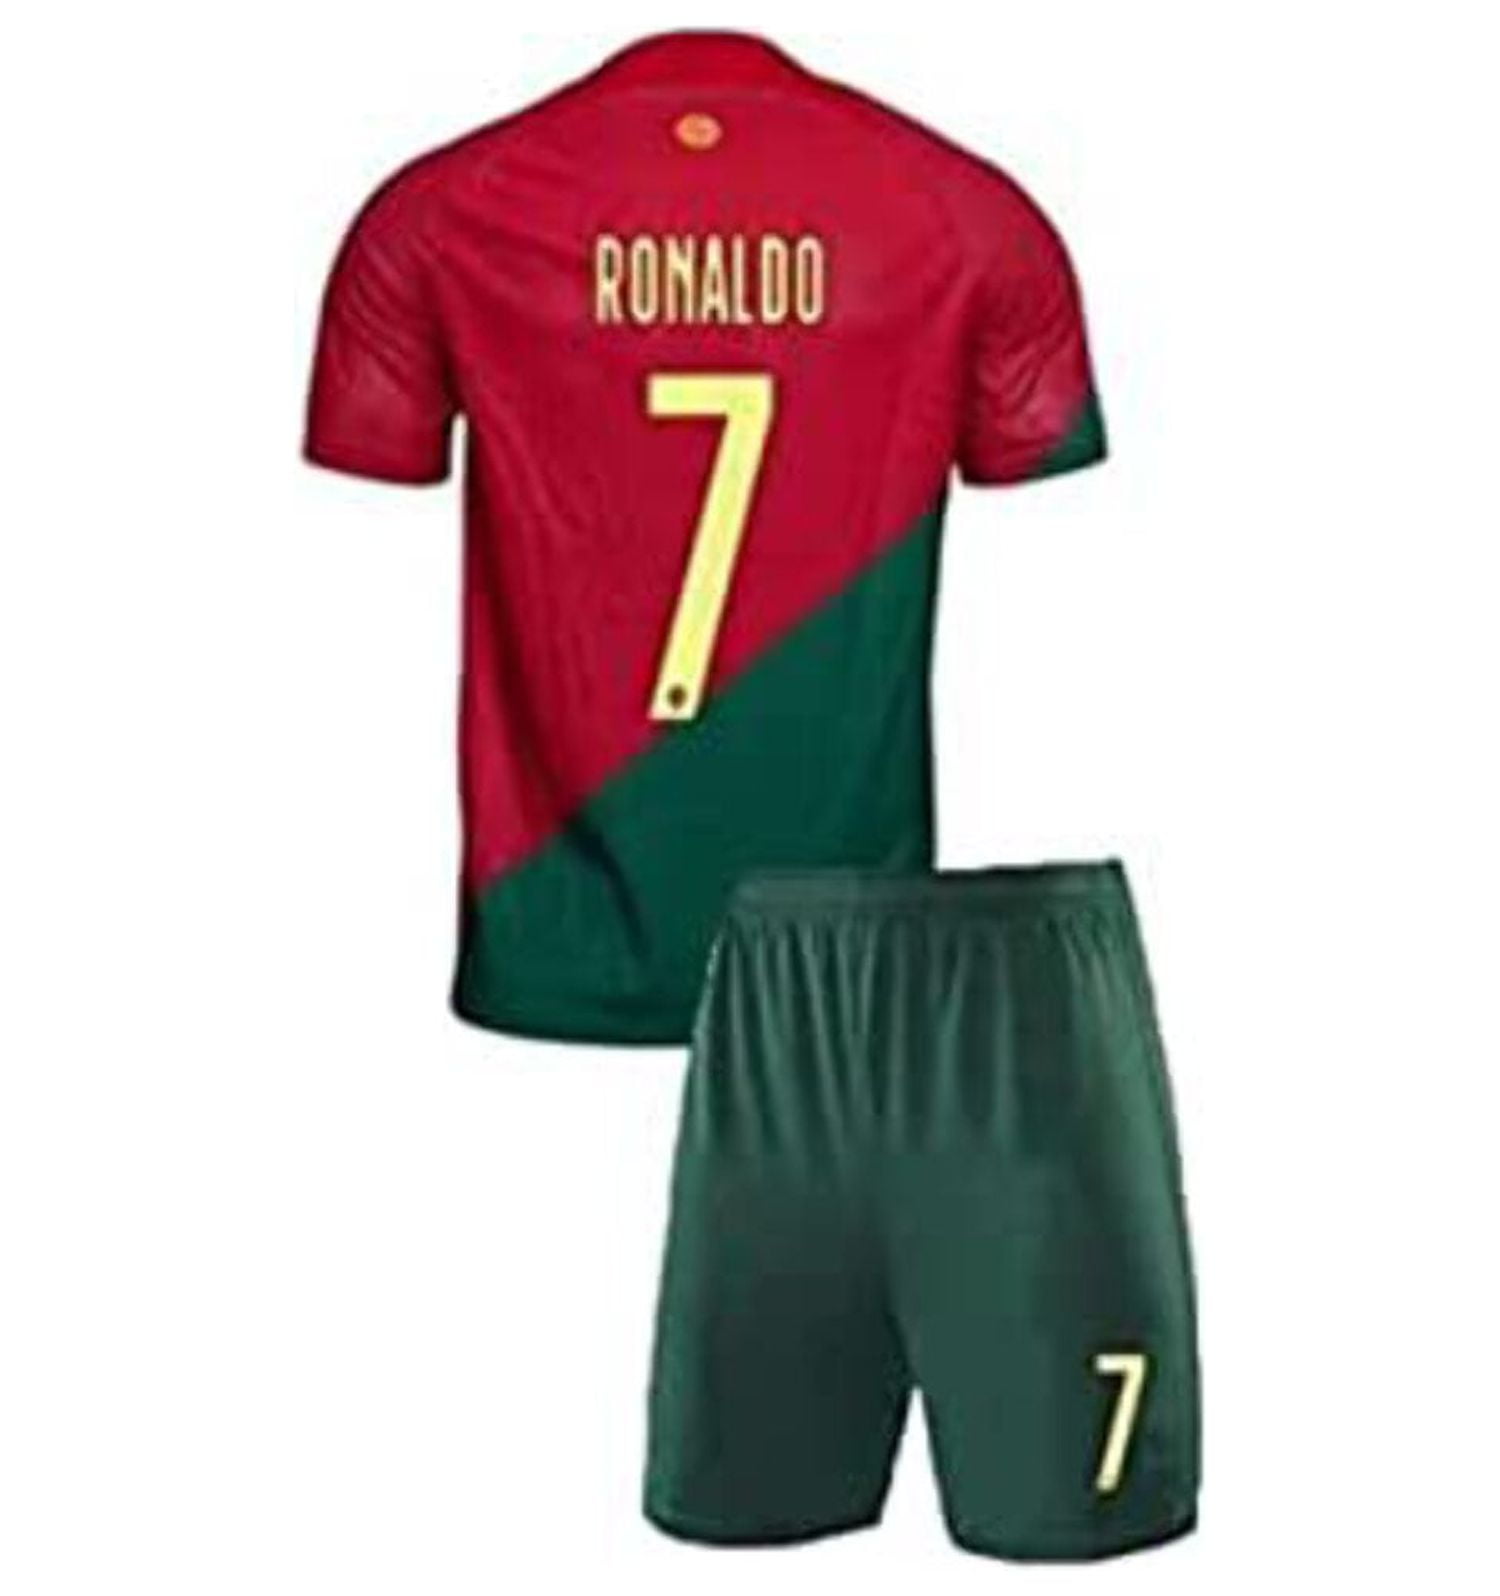 how much is ronaldo shirt